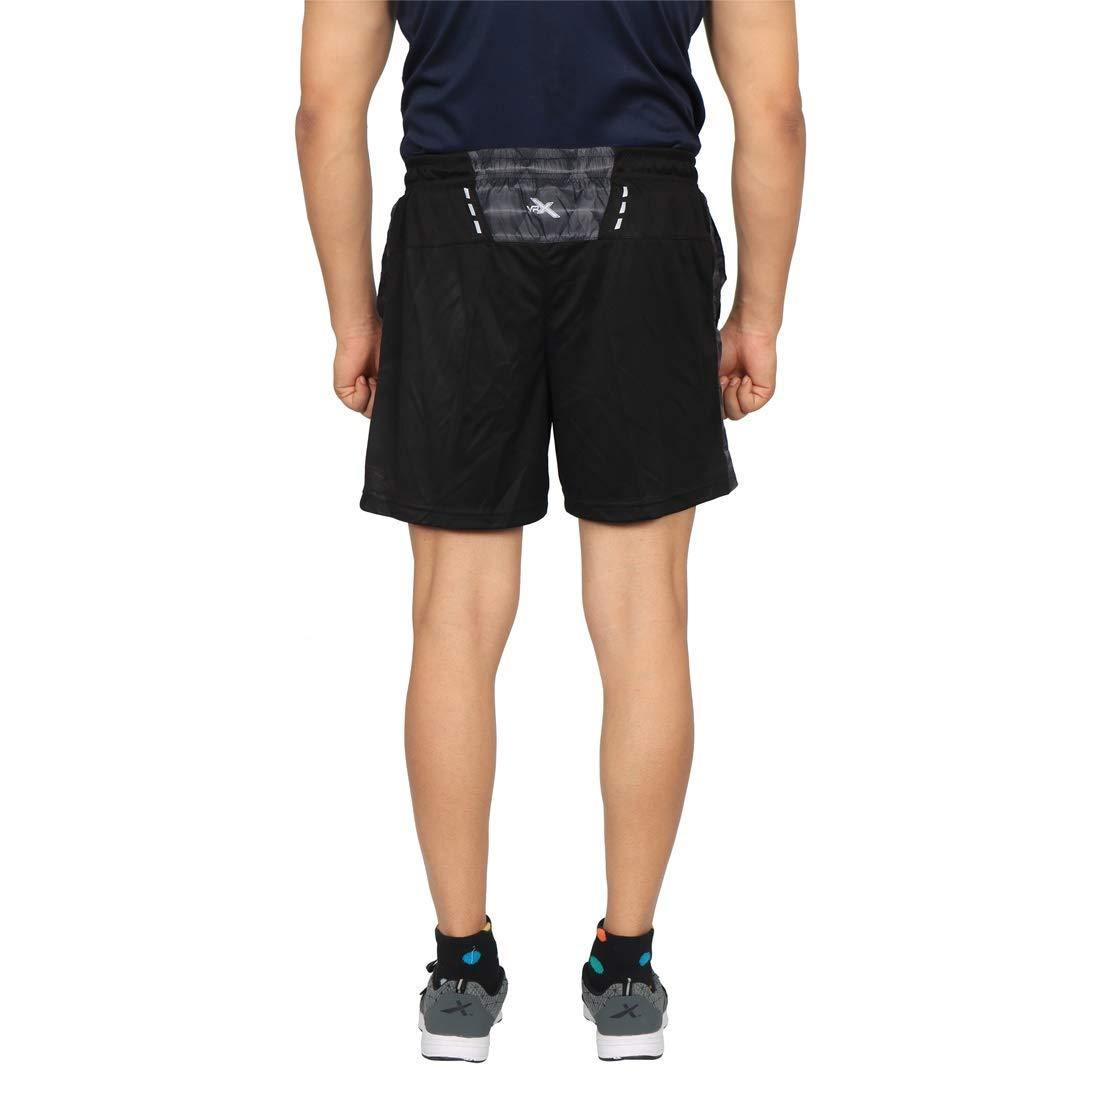 Vector X VS-2900 Polyester Material Shorts for Men, Black - Best Price online Prokicksports.com